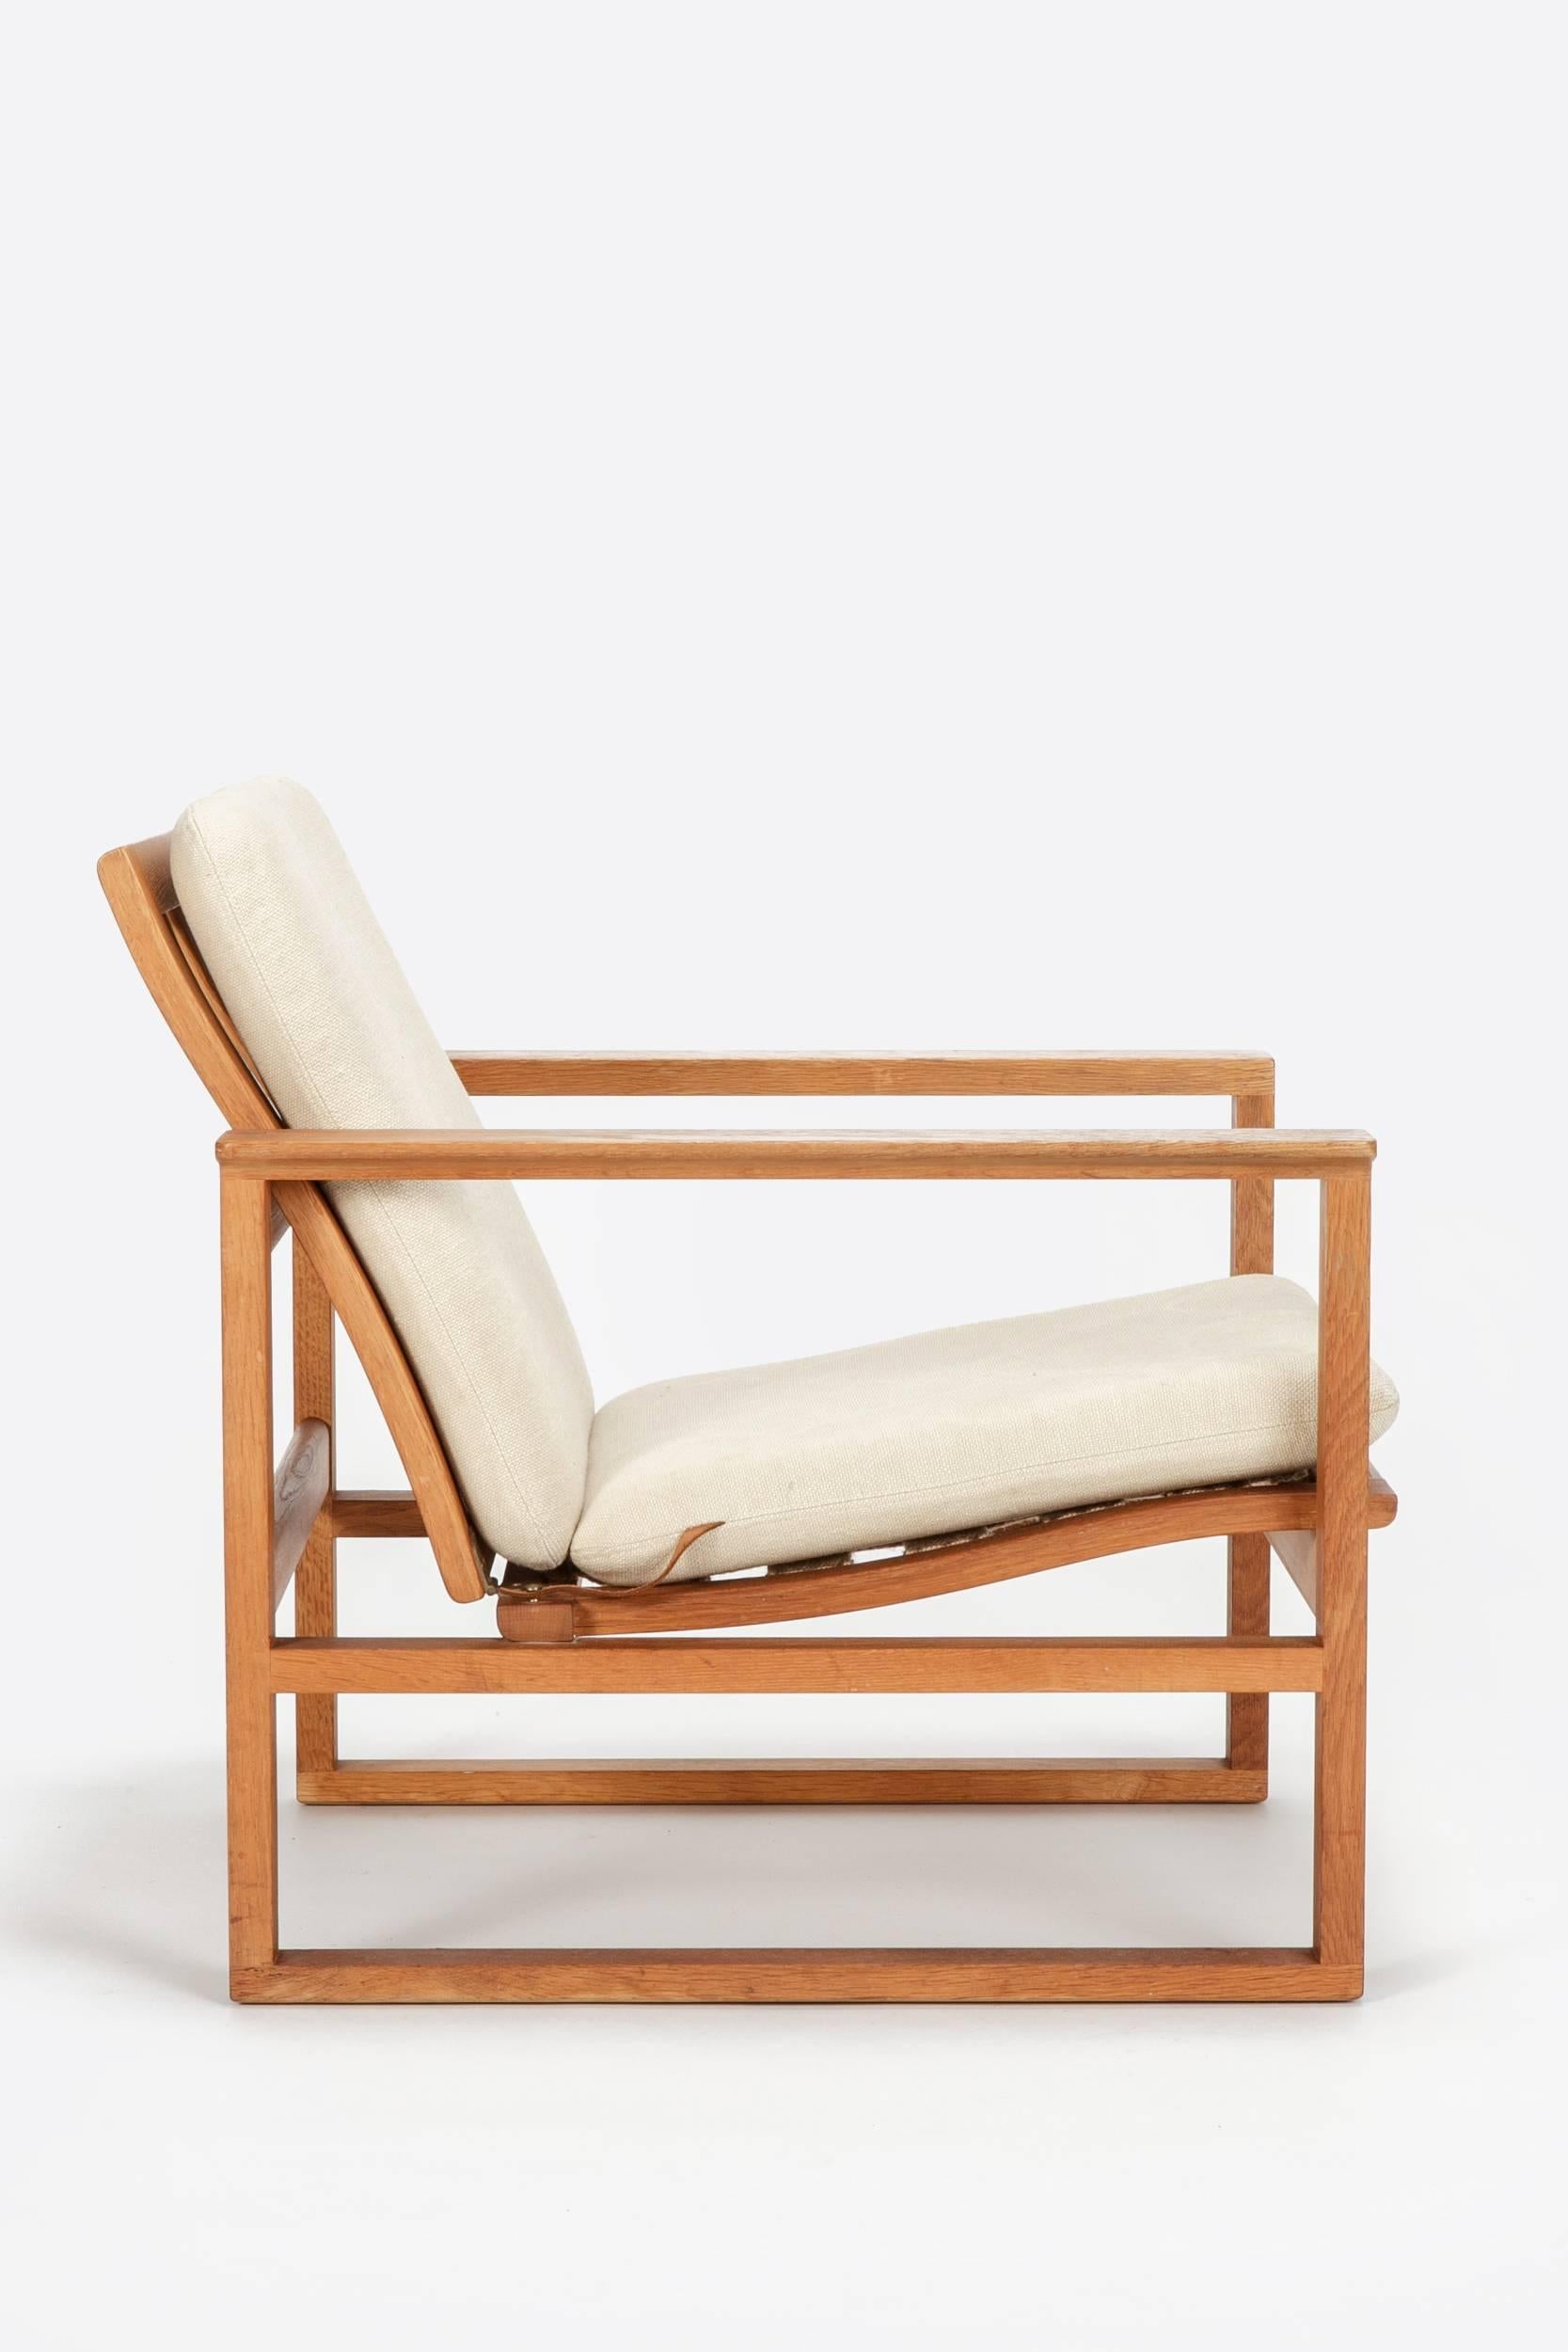 Danish Borge Mogensen Lounge Chair 2256 Oak, 1956 (Skandinavische Moderne)